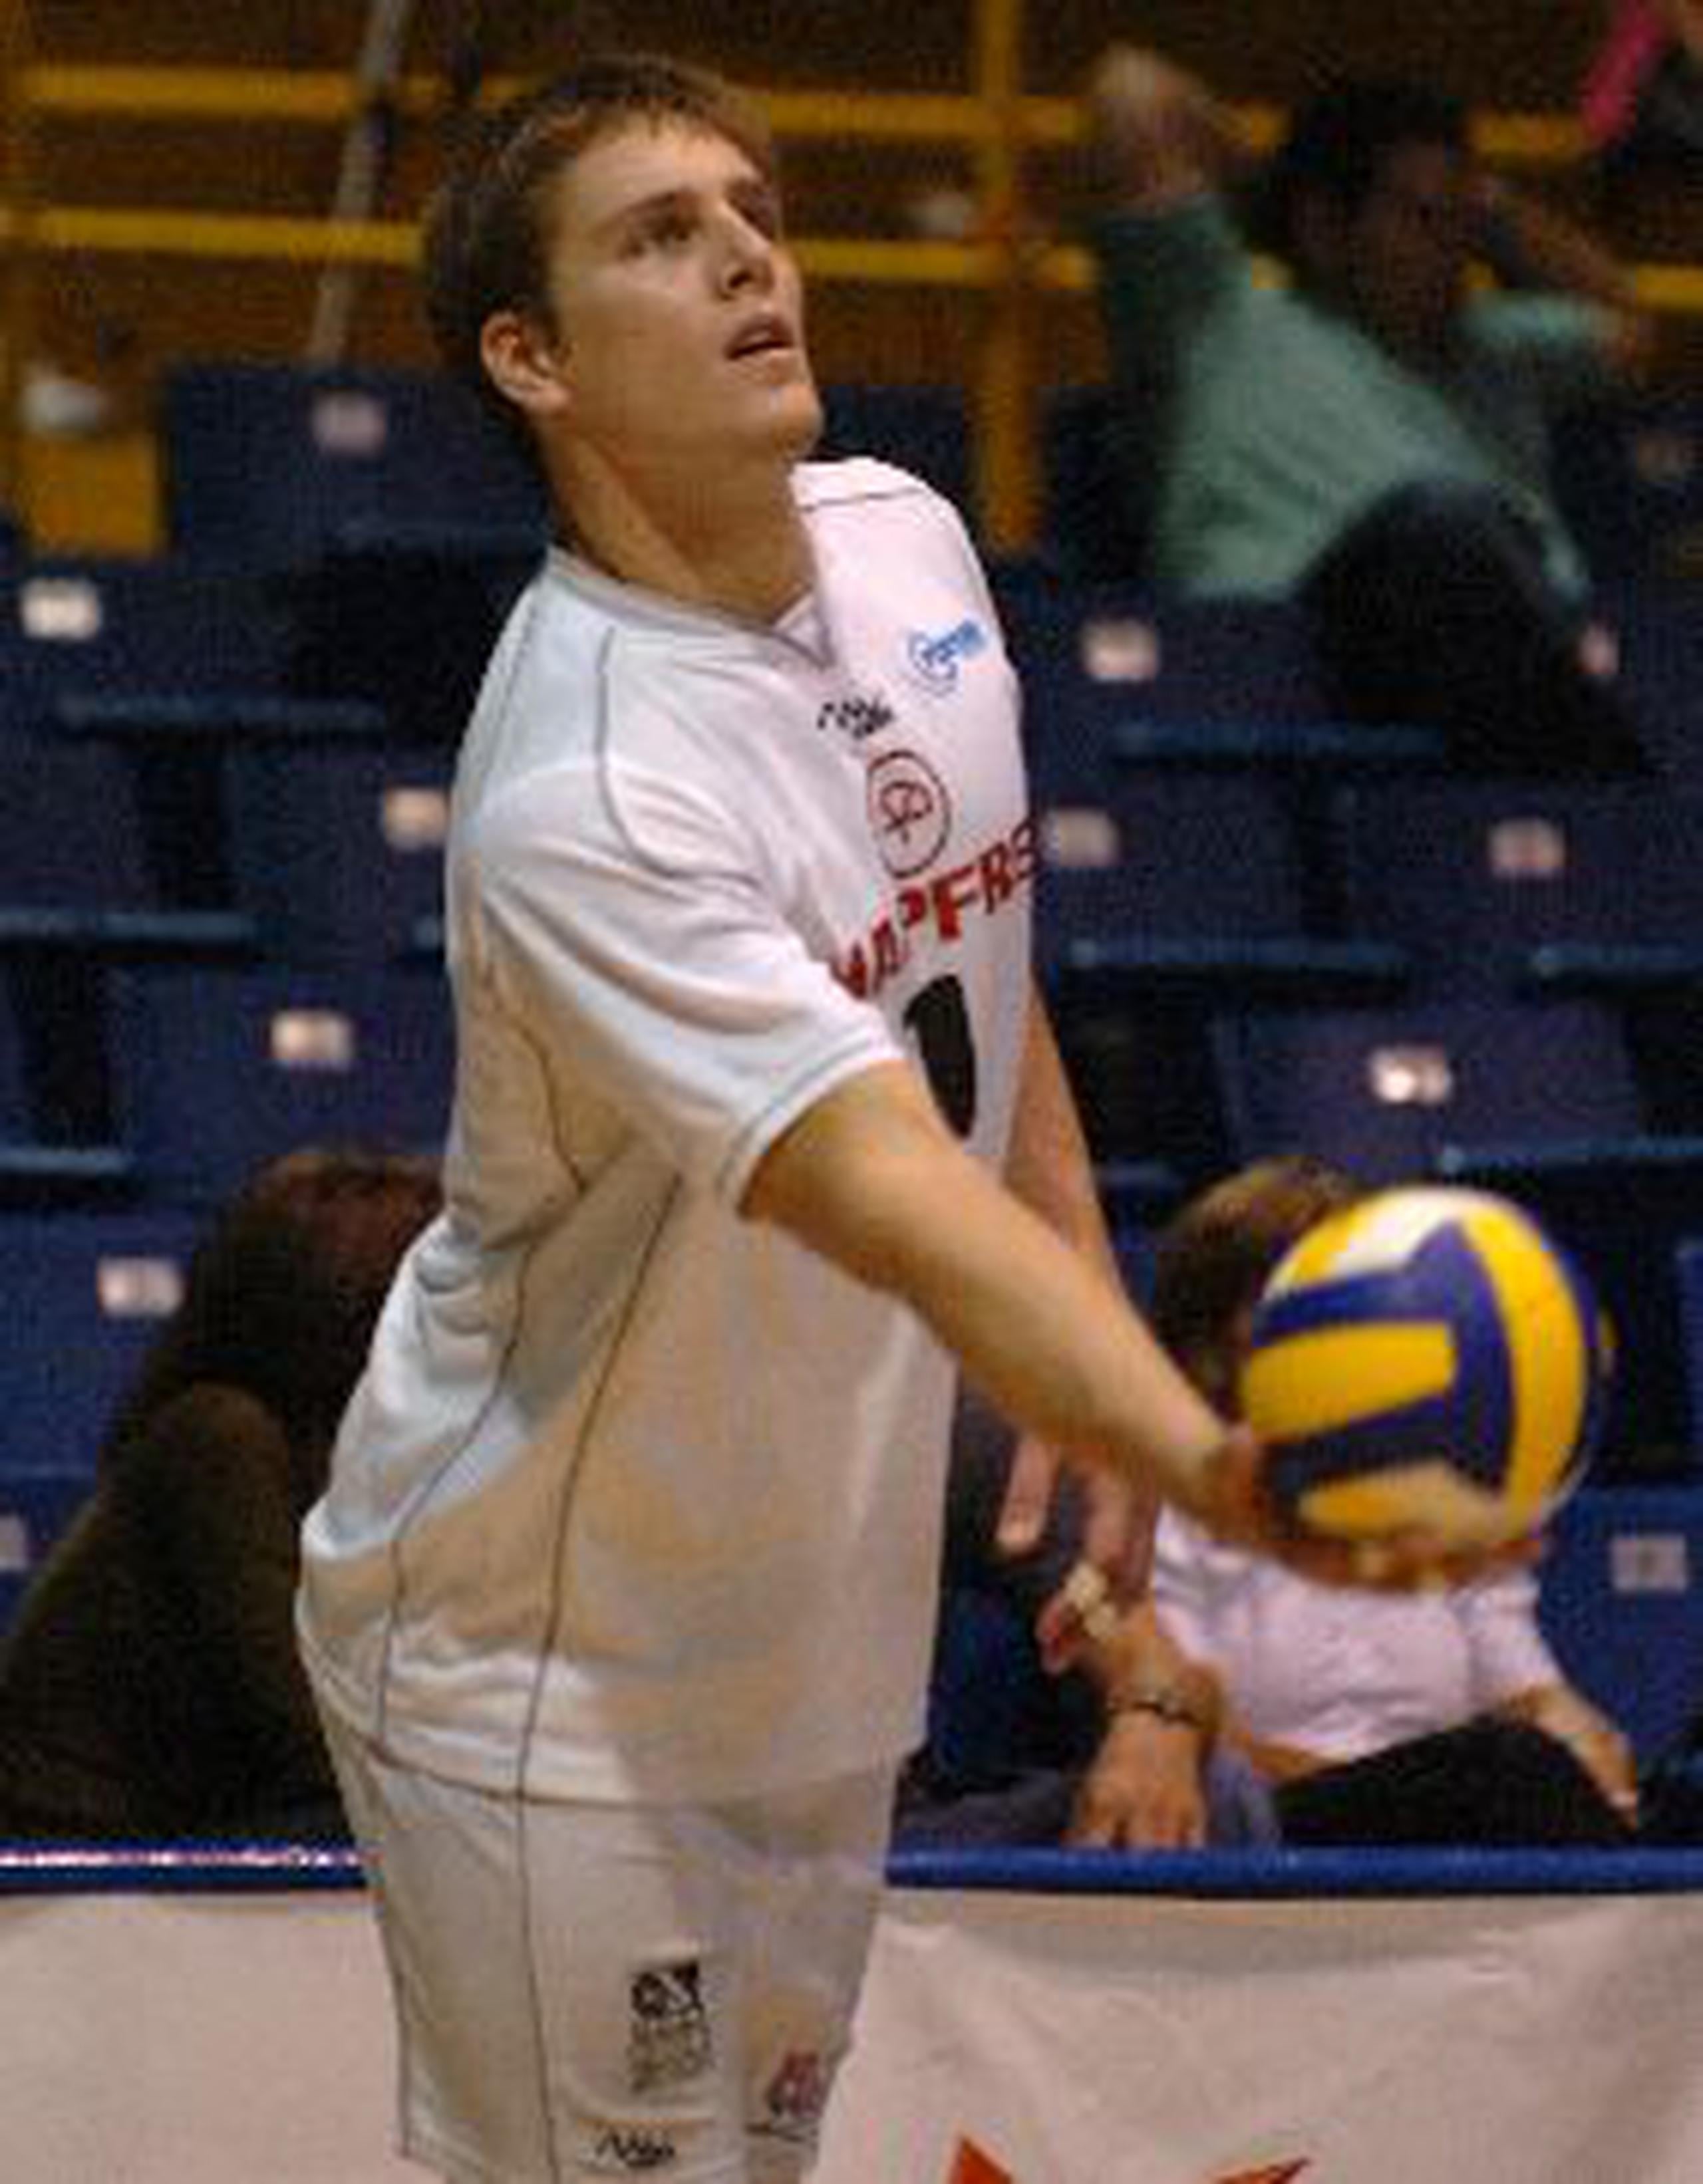  Evan Patak jugó como refuerzo de los Playeros de San Juan en la temporada del 2007.&nbsp;<font color="yellow">(Archivo)</font>